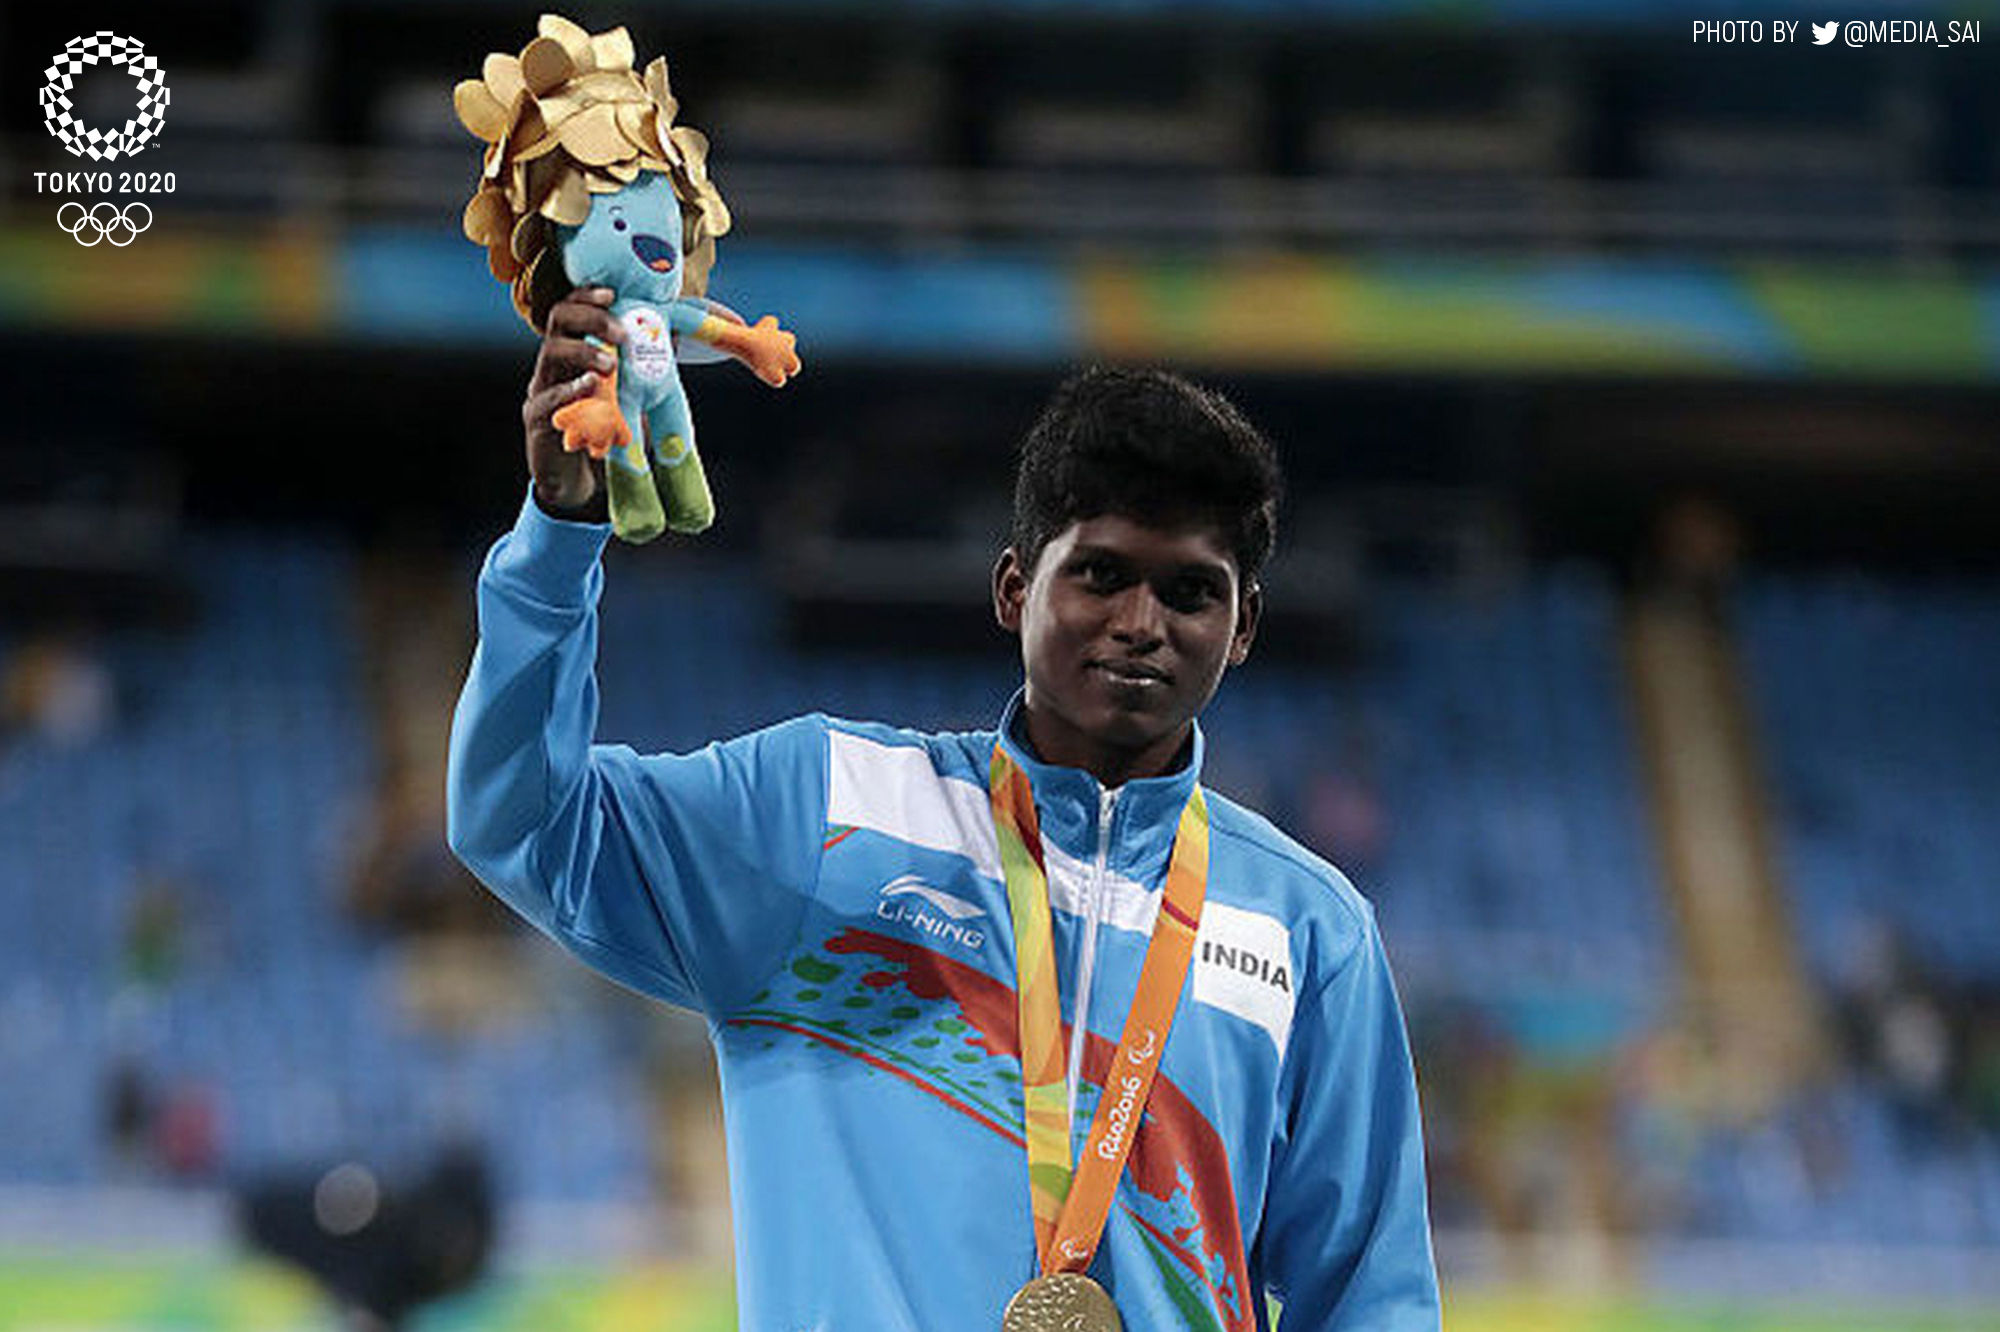 Tokyo Paralympics: Indian high-jumper Mariyappan Thangavelu wins silver